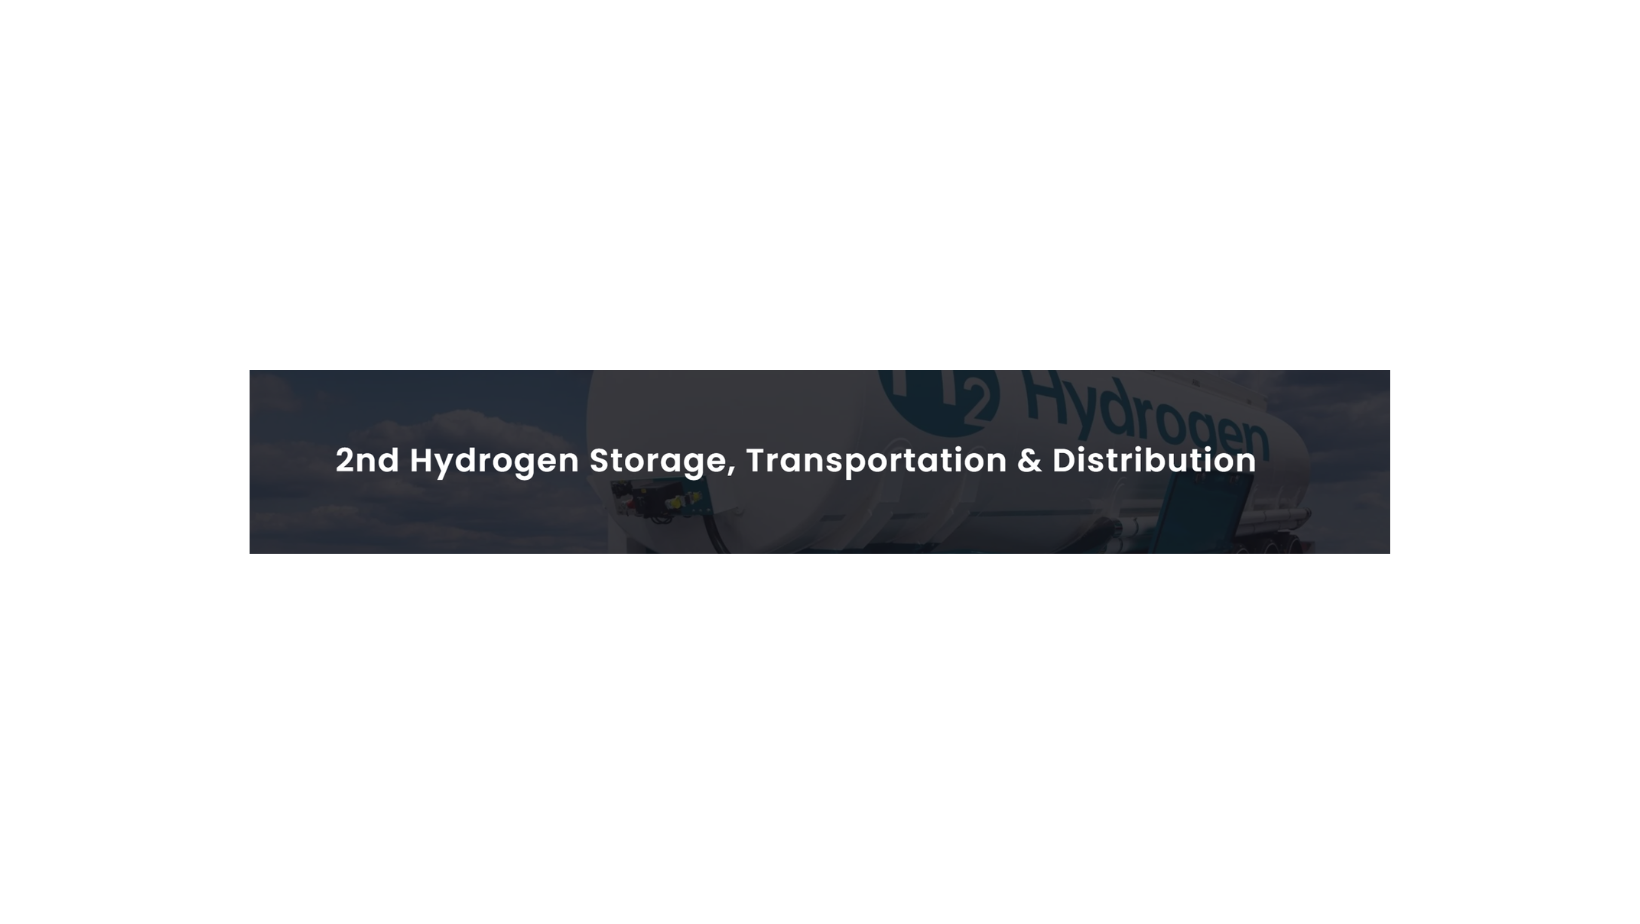 2nd Hydrogen Storage, Transportation & Distribution